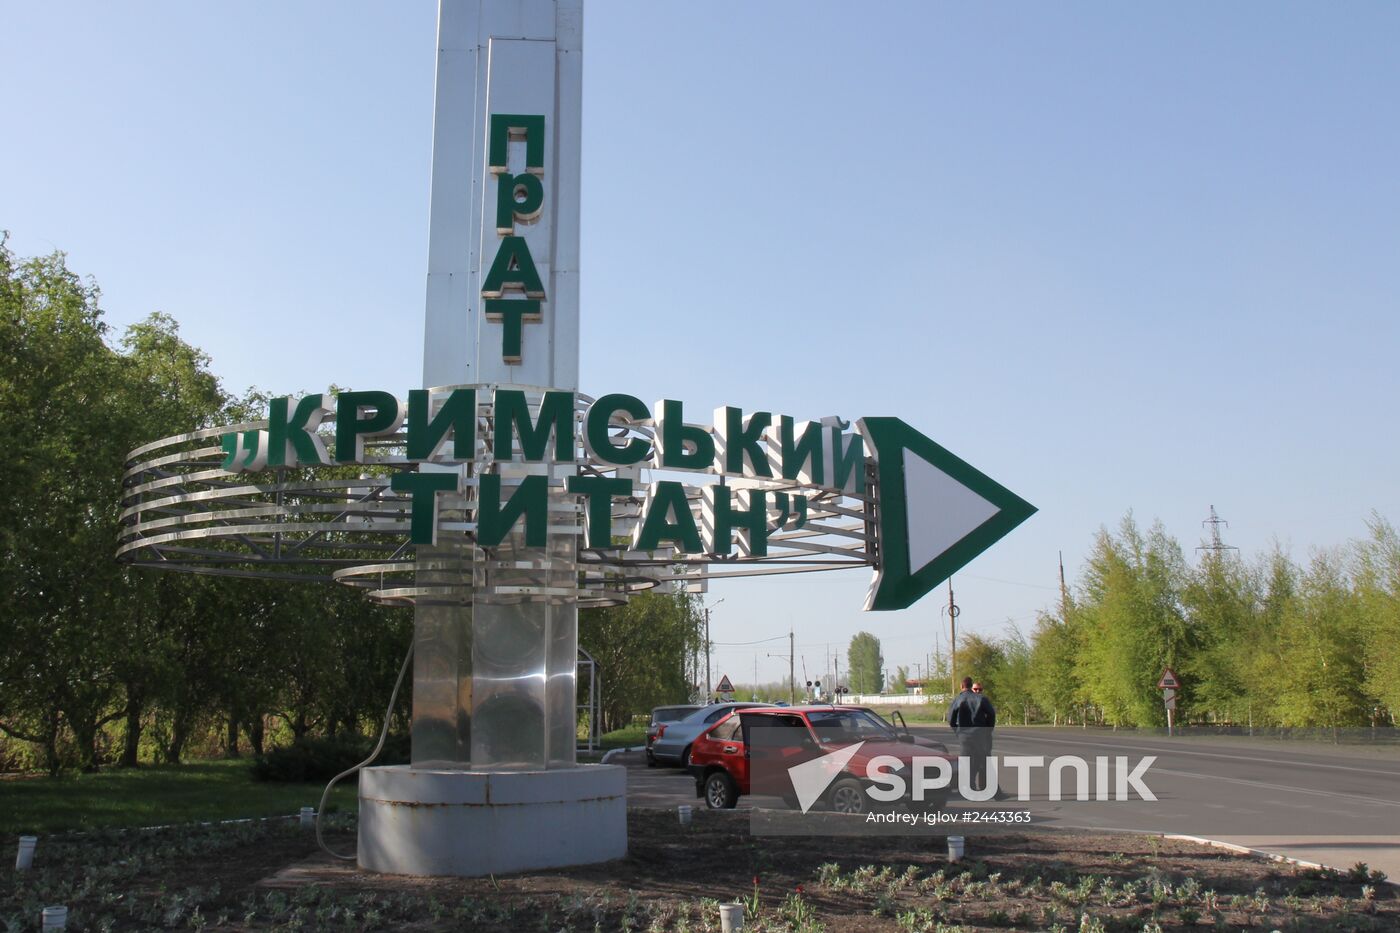 Crimea TITAN plant producing titanium dioxide